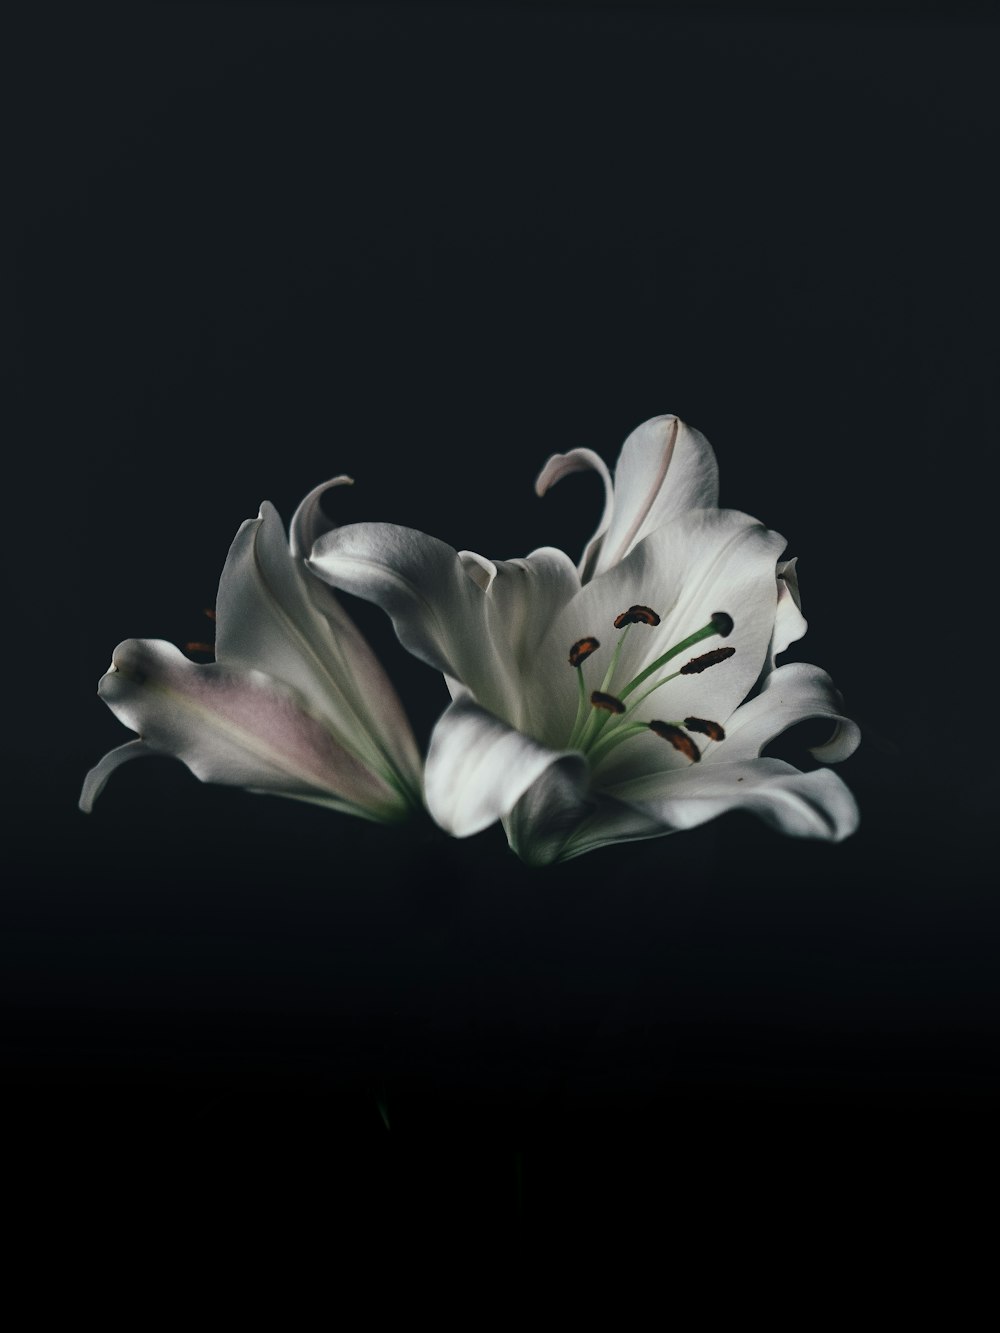 Flowers Black Background Pictures | Download Free Images on Unsplash